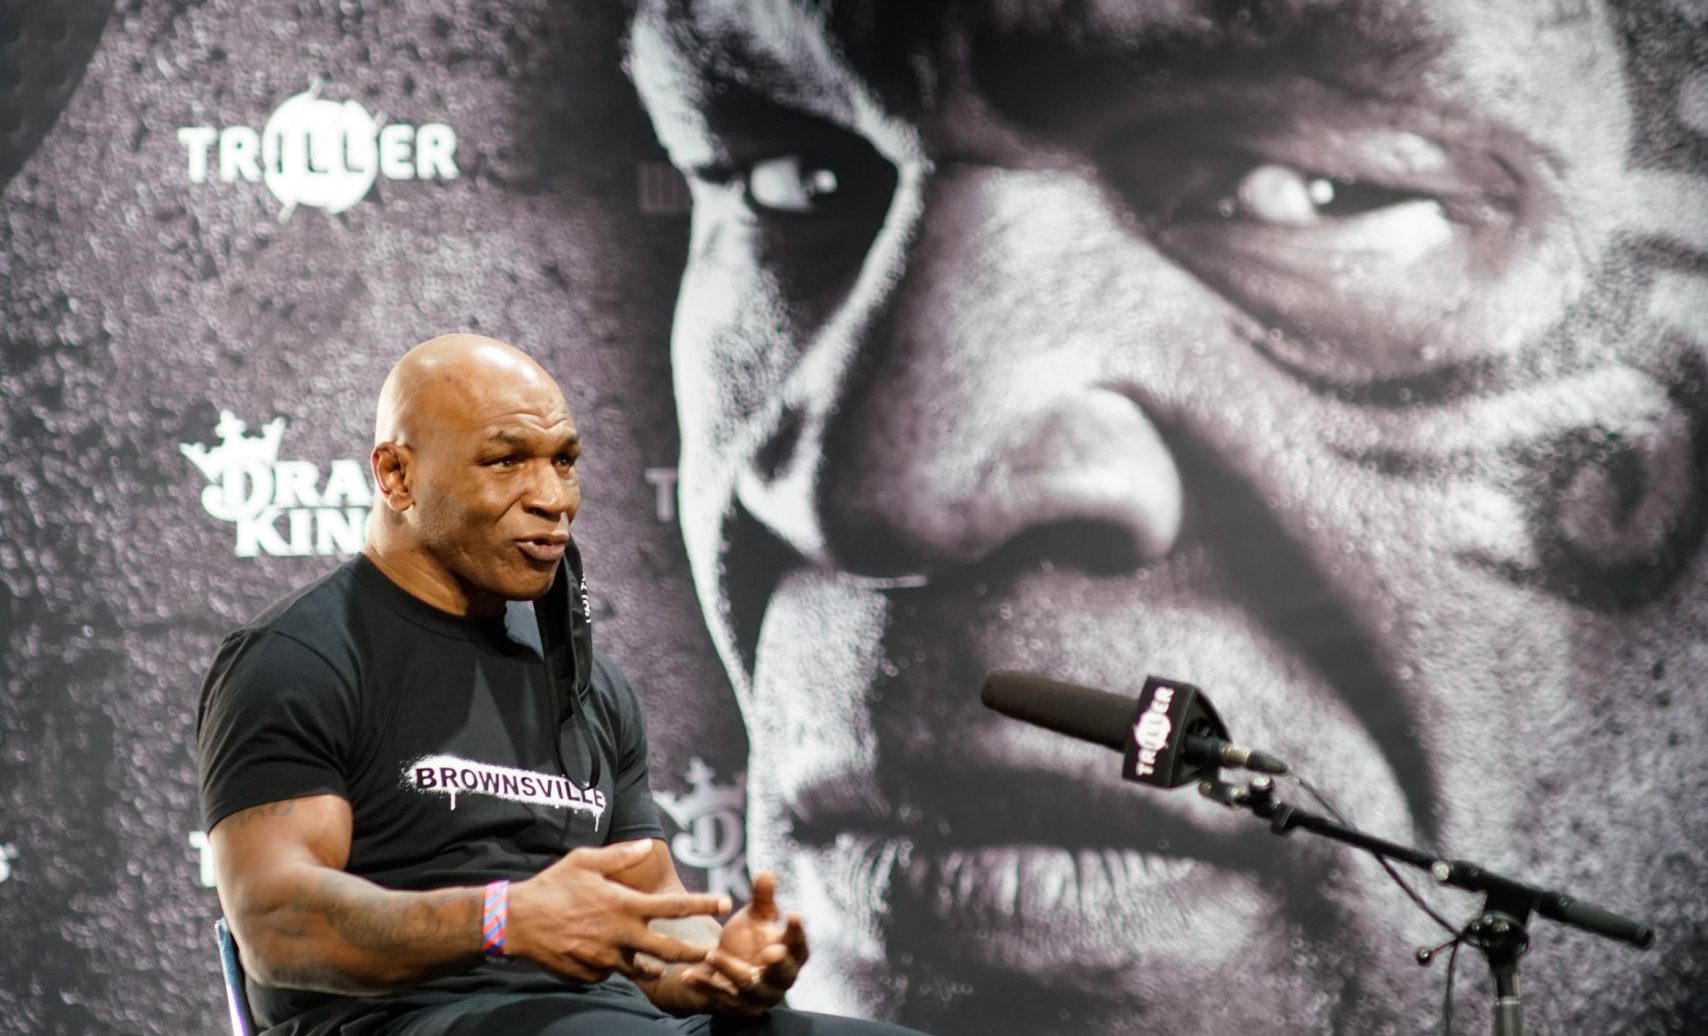 Mike Tyson vs Roy Jones Jr-Weigh Ins